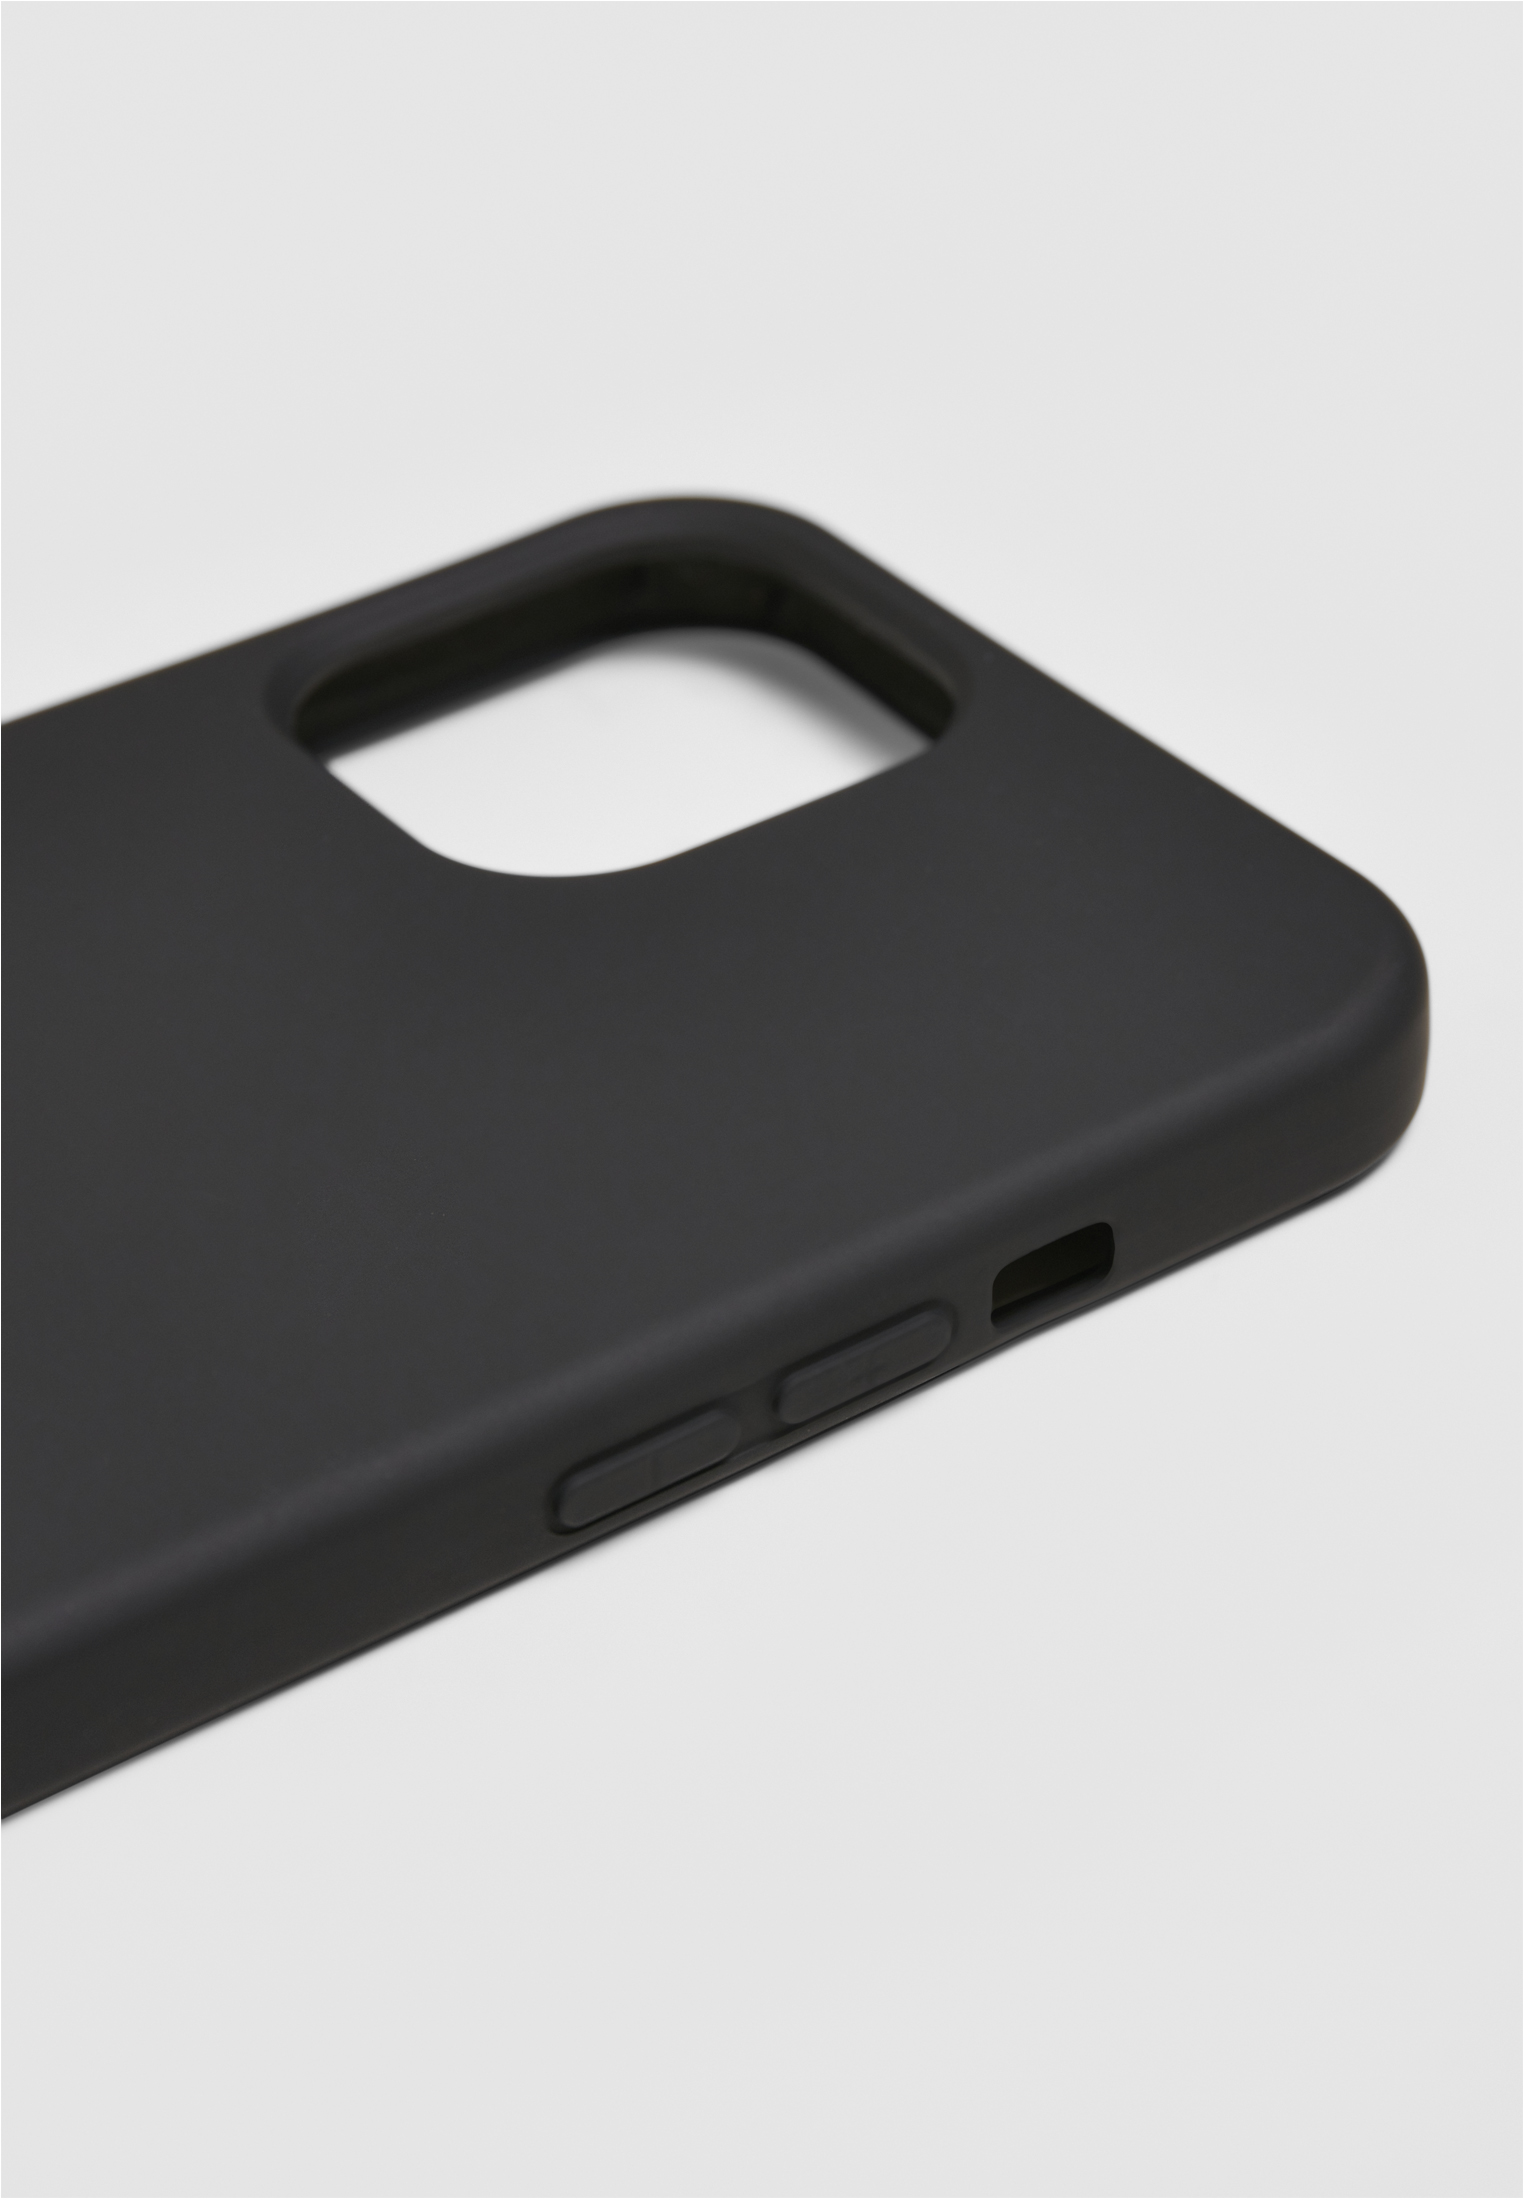 Taschen Logo Phonecase I Phone 12 Max in Farbe black